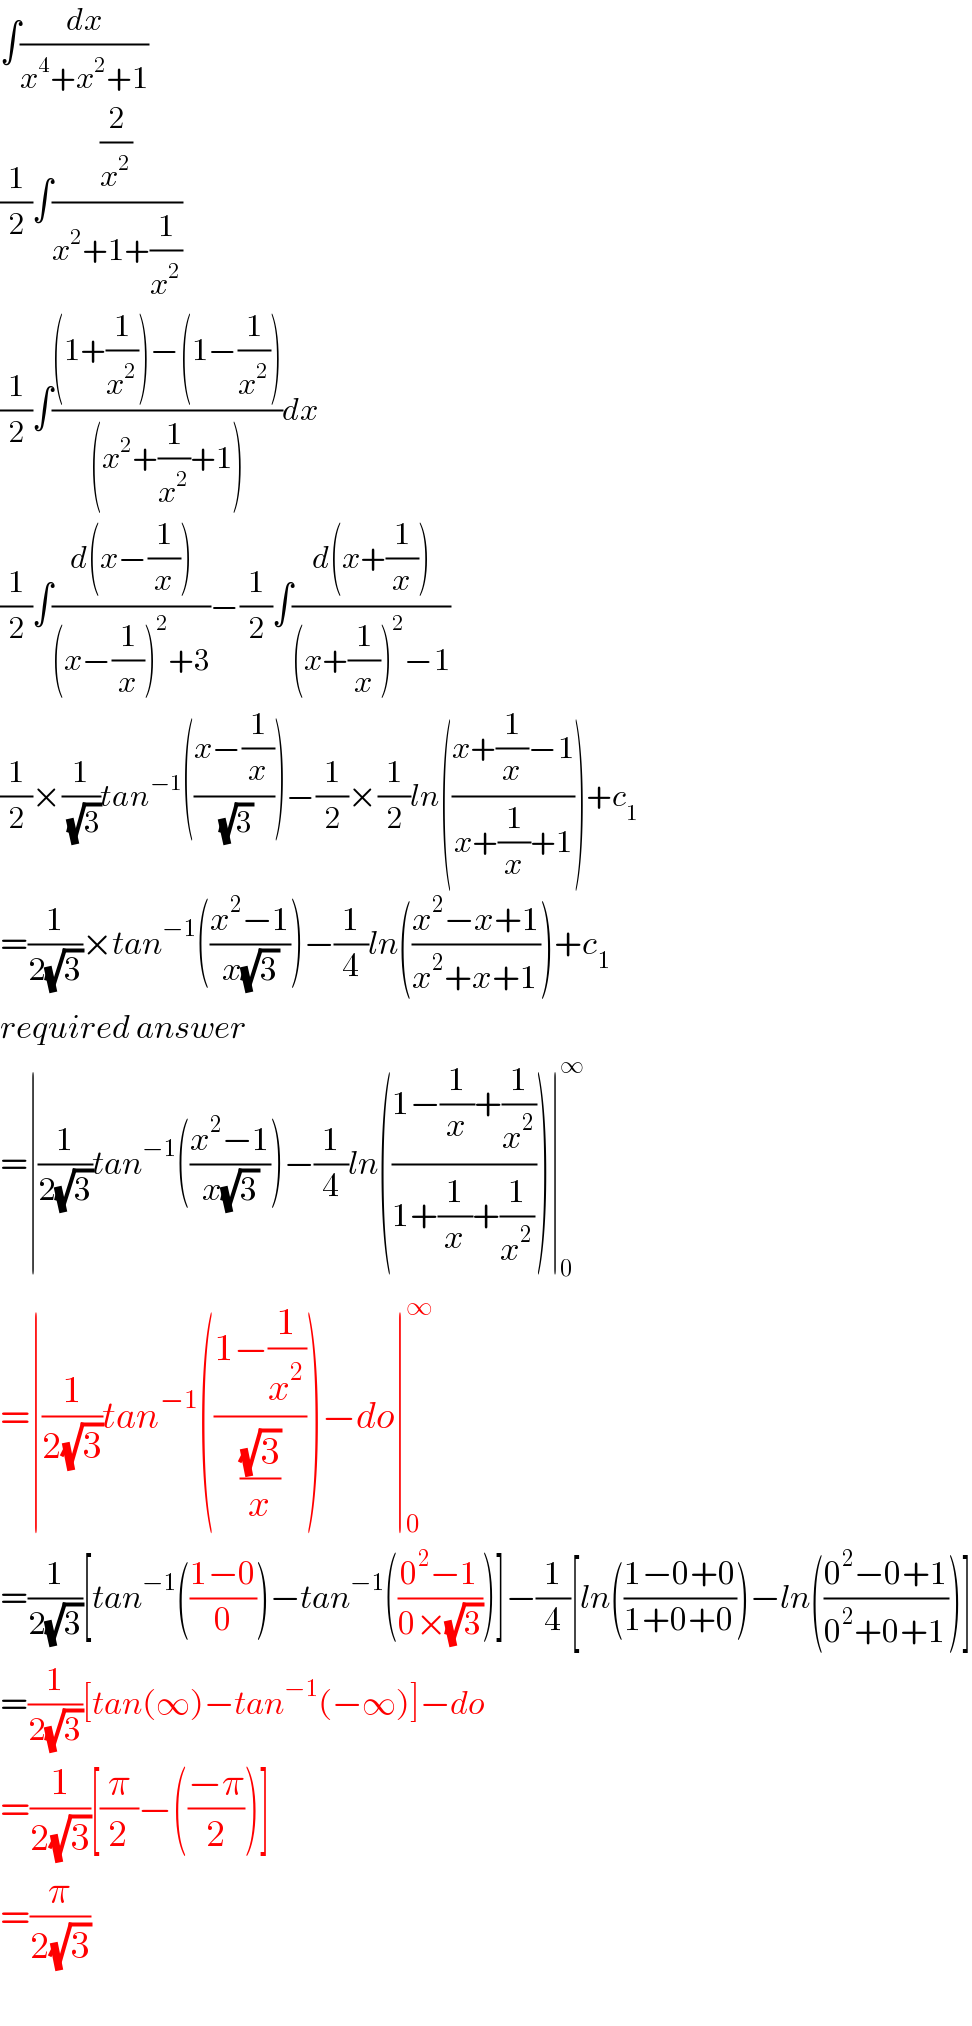 ∫(dx/(x^4 +x^2 +1))  (1/2)∫((2/x^2 )/(x^2 +1+(1/x^2 )))  (1/2)∫(((1+(1/x^2 ))−(1−(1/x^2 )))/((x^2 +(1/x^2 )+1)))dx  (1/2)∫((d(x−(1/x)))/((x−(1/x))^2 +3))−(1/2)∫((d(x+(1/x)))/((x+(1/x))^2 −1))  (1/2)×(1/(√3))tan^(−1) (((x−(1/x))/(√3)))−(1/2)×(1/2)ln(((x+(1/x)−1)/(x+(1/x)+1)))+c_1   =(1/(2(√3)))×tan^(−1) (((x^2 −1)/(x(√3))))−(1/4)ln(((x^2 −x+1)/(x^2 +x+1)))+c_1   required answer  =∣(1/(2(√3)))tan^(−1) (((x^2 −1)/(x(√3))))−(1/4)ln(((1−(1/x)+(1/x^2 ))/(1+(1/x)+(1/x^2 ))))∣_0 ^∞   =∣(1/(2(√3)))tan^(−1) (((1−(1/x^2 ))/((√3)/x)))−do∣_0 ^∞   =(1/(2(√3)))[tan^(−1) (((1−0)/0))−tan^(−1) (((0^2 −1)/(0×(√3))))]−(1/4)[ln(((1−0+0)/(1+0+0)))−ln(((0^2 −0+1)/(0^2 +0+1)))]  =(1/(2(√3)))[tan(∞)−tan^(−1) (−∞)]−do  =(1/(2(√3)))[(π/2)−(((−π)/2))]  =(π/(2(√3)))    